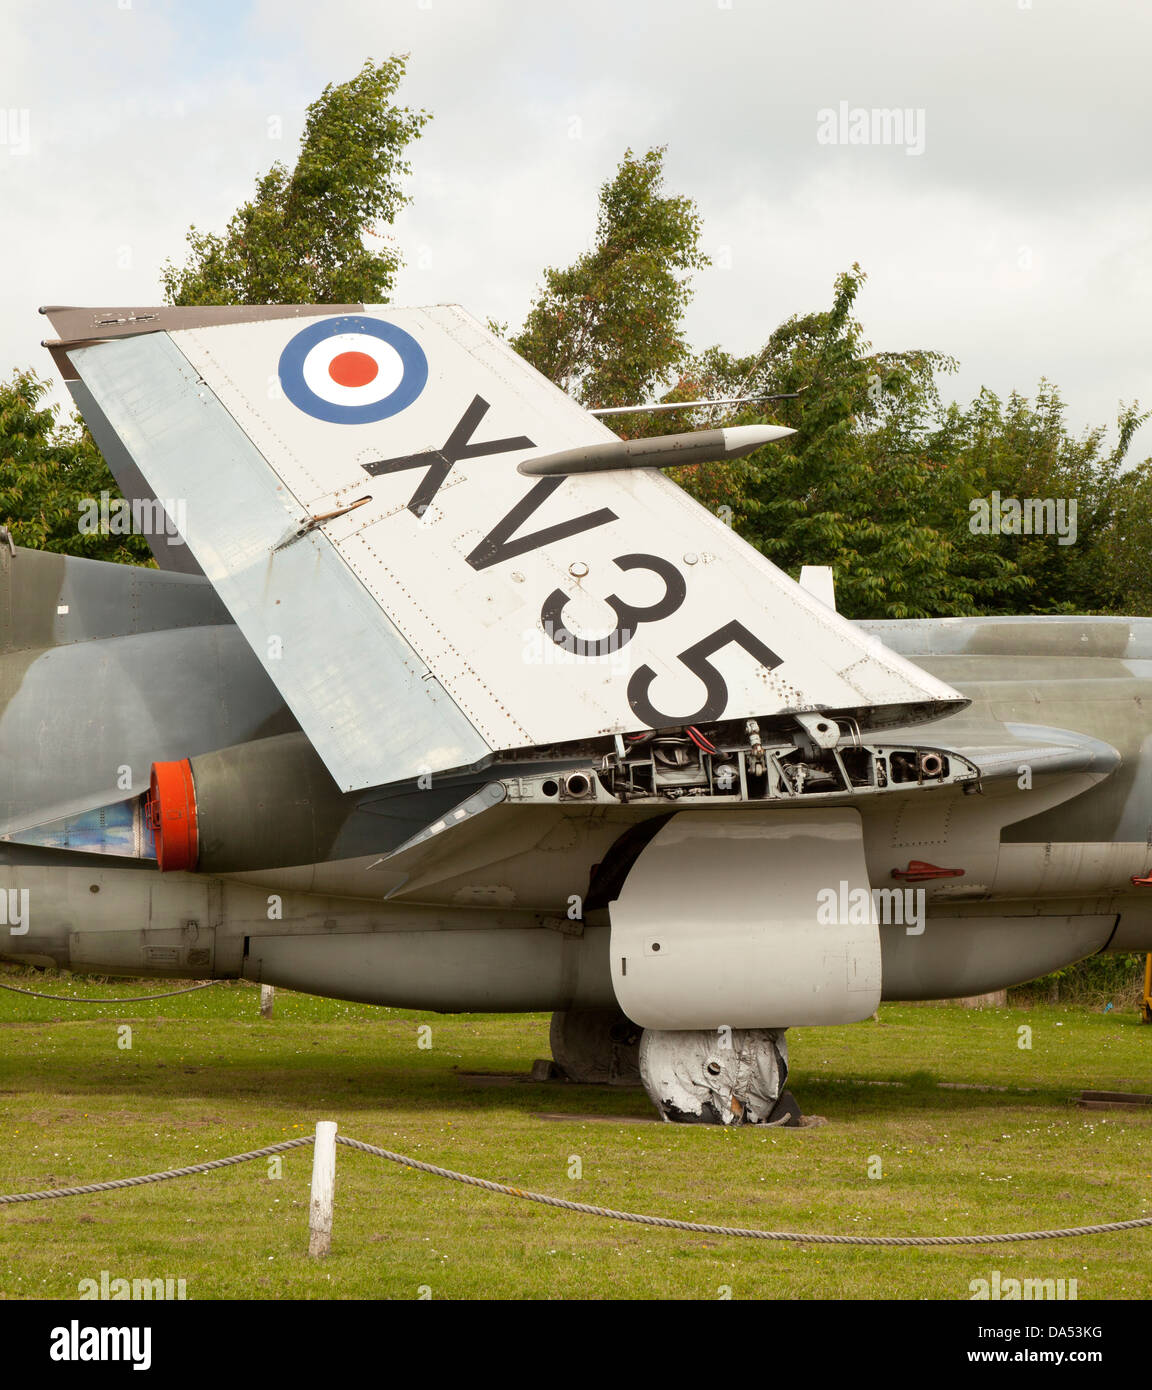 Blackburn Buccaneer (XV350) Niveau faible des avions d'attaque nucléaire Banque D'Images